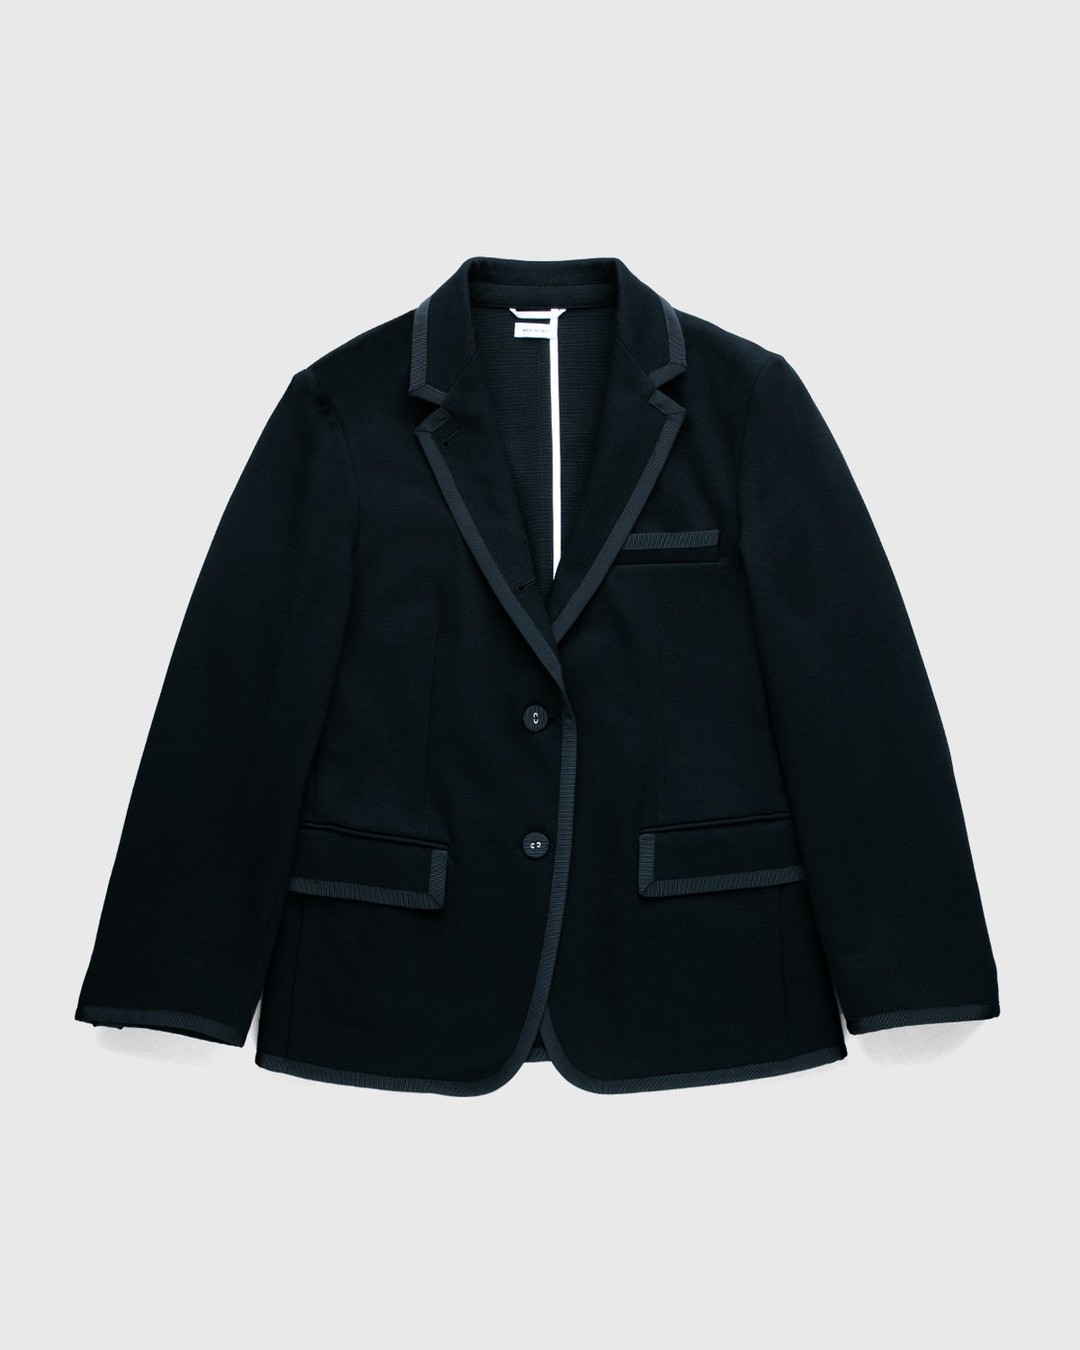 Thom Browne x Highsnobiety – Women’s Deconstructed Sport Jacket Black - Blazers - Black - Image 1